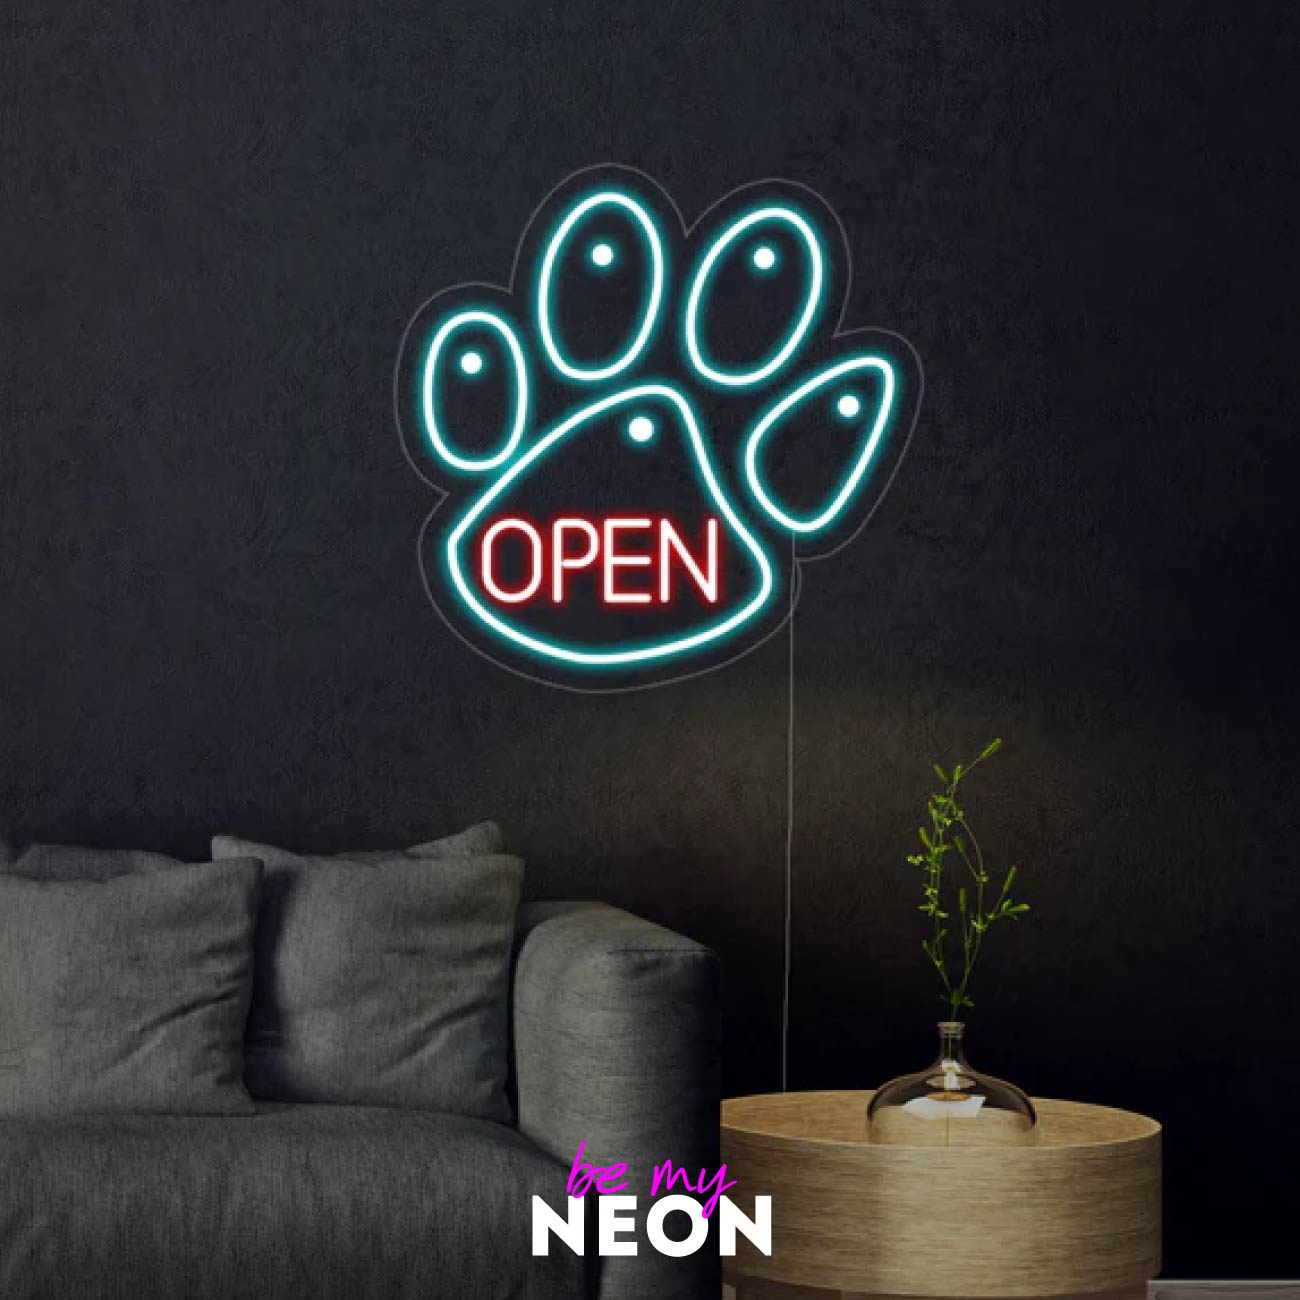 Open Schild Tier Tatze LED Neonschild